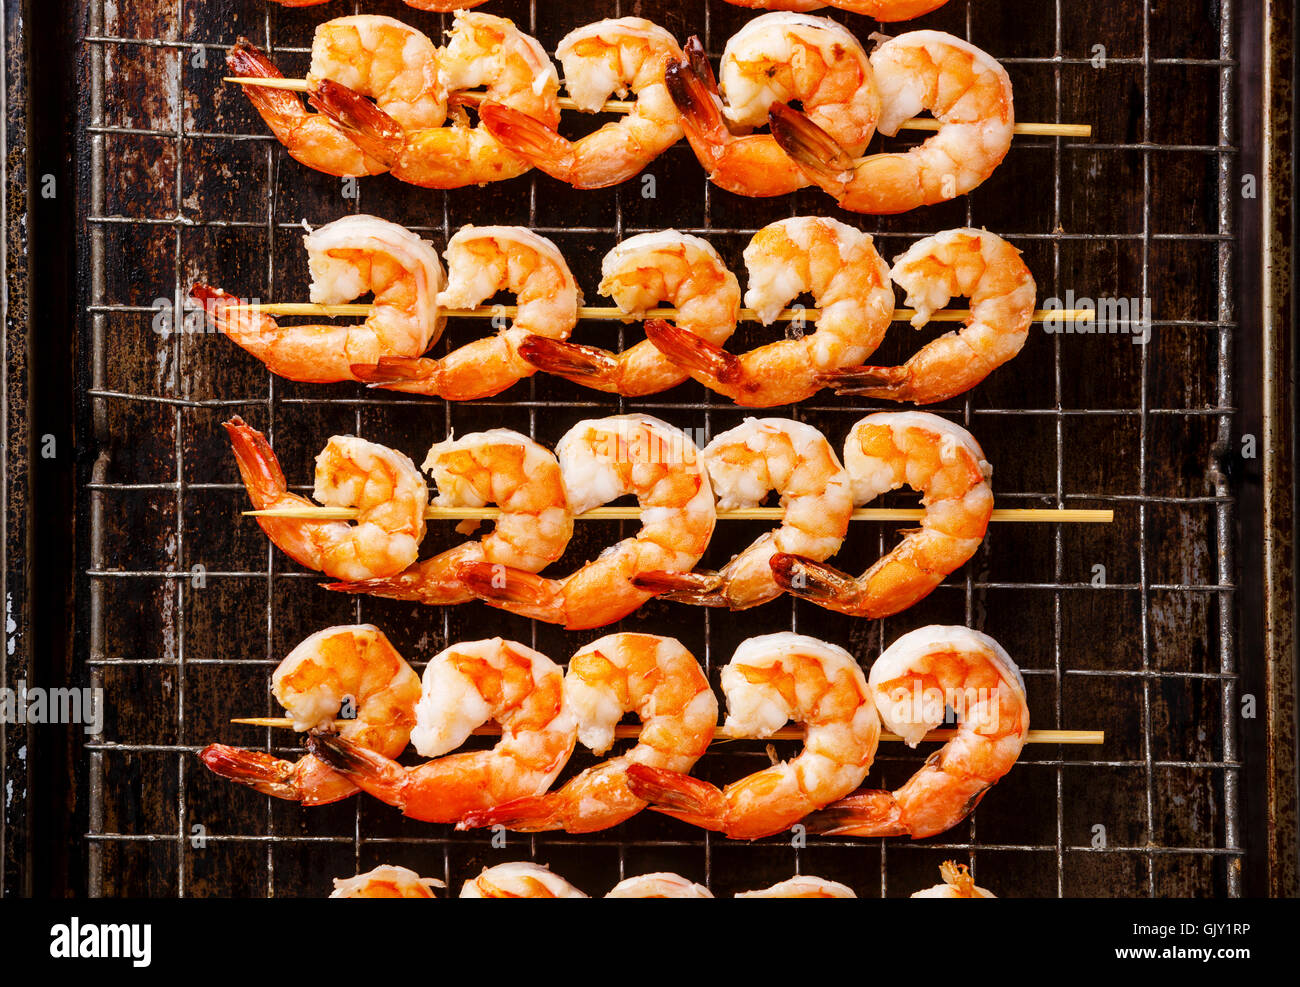 Grilled fried Prawns on skewers on metal grid baking sheet background Stock Photo